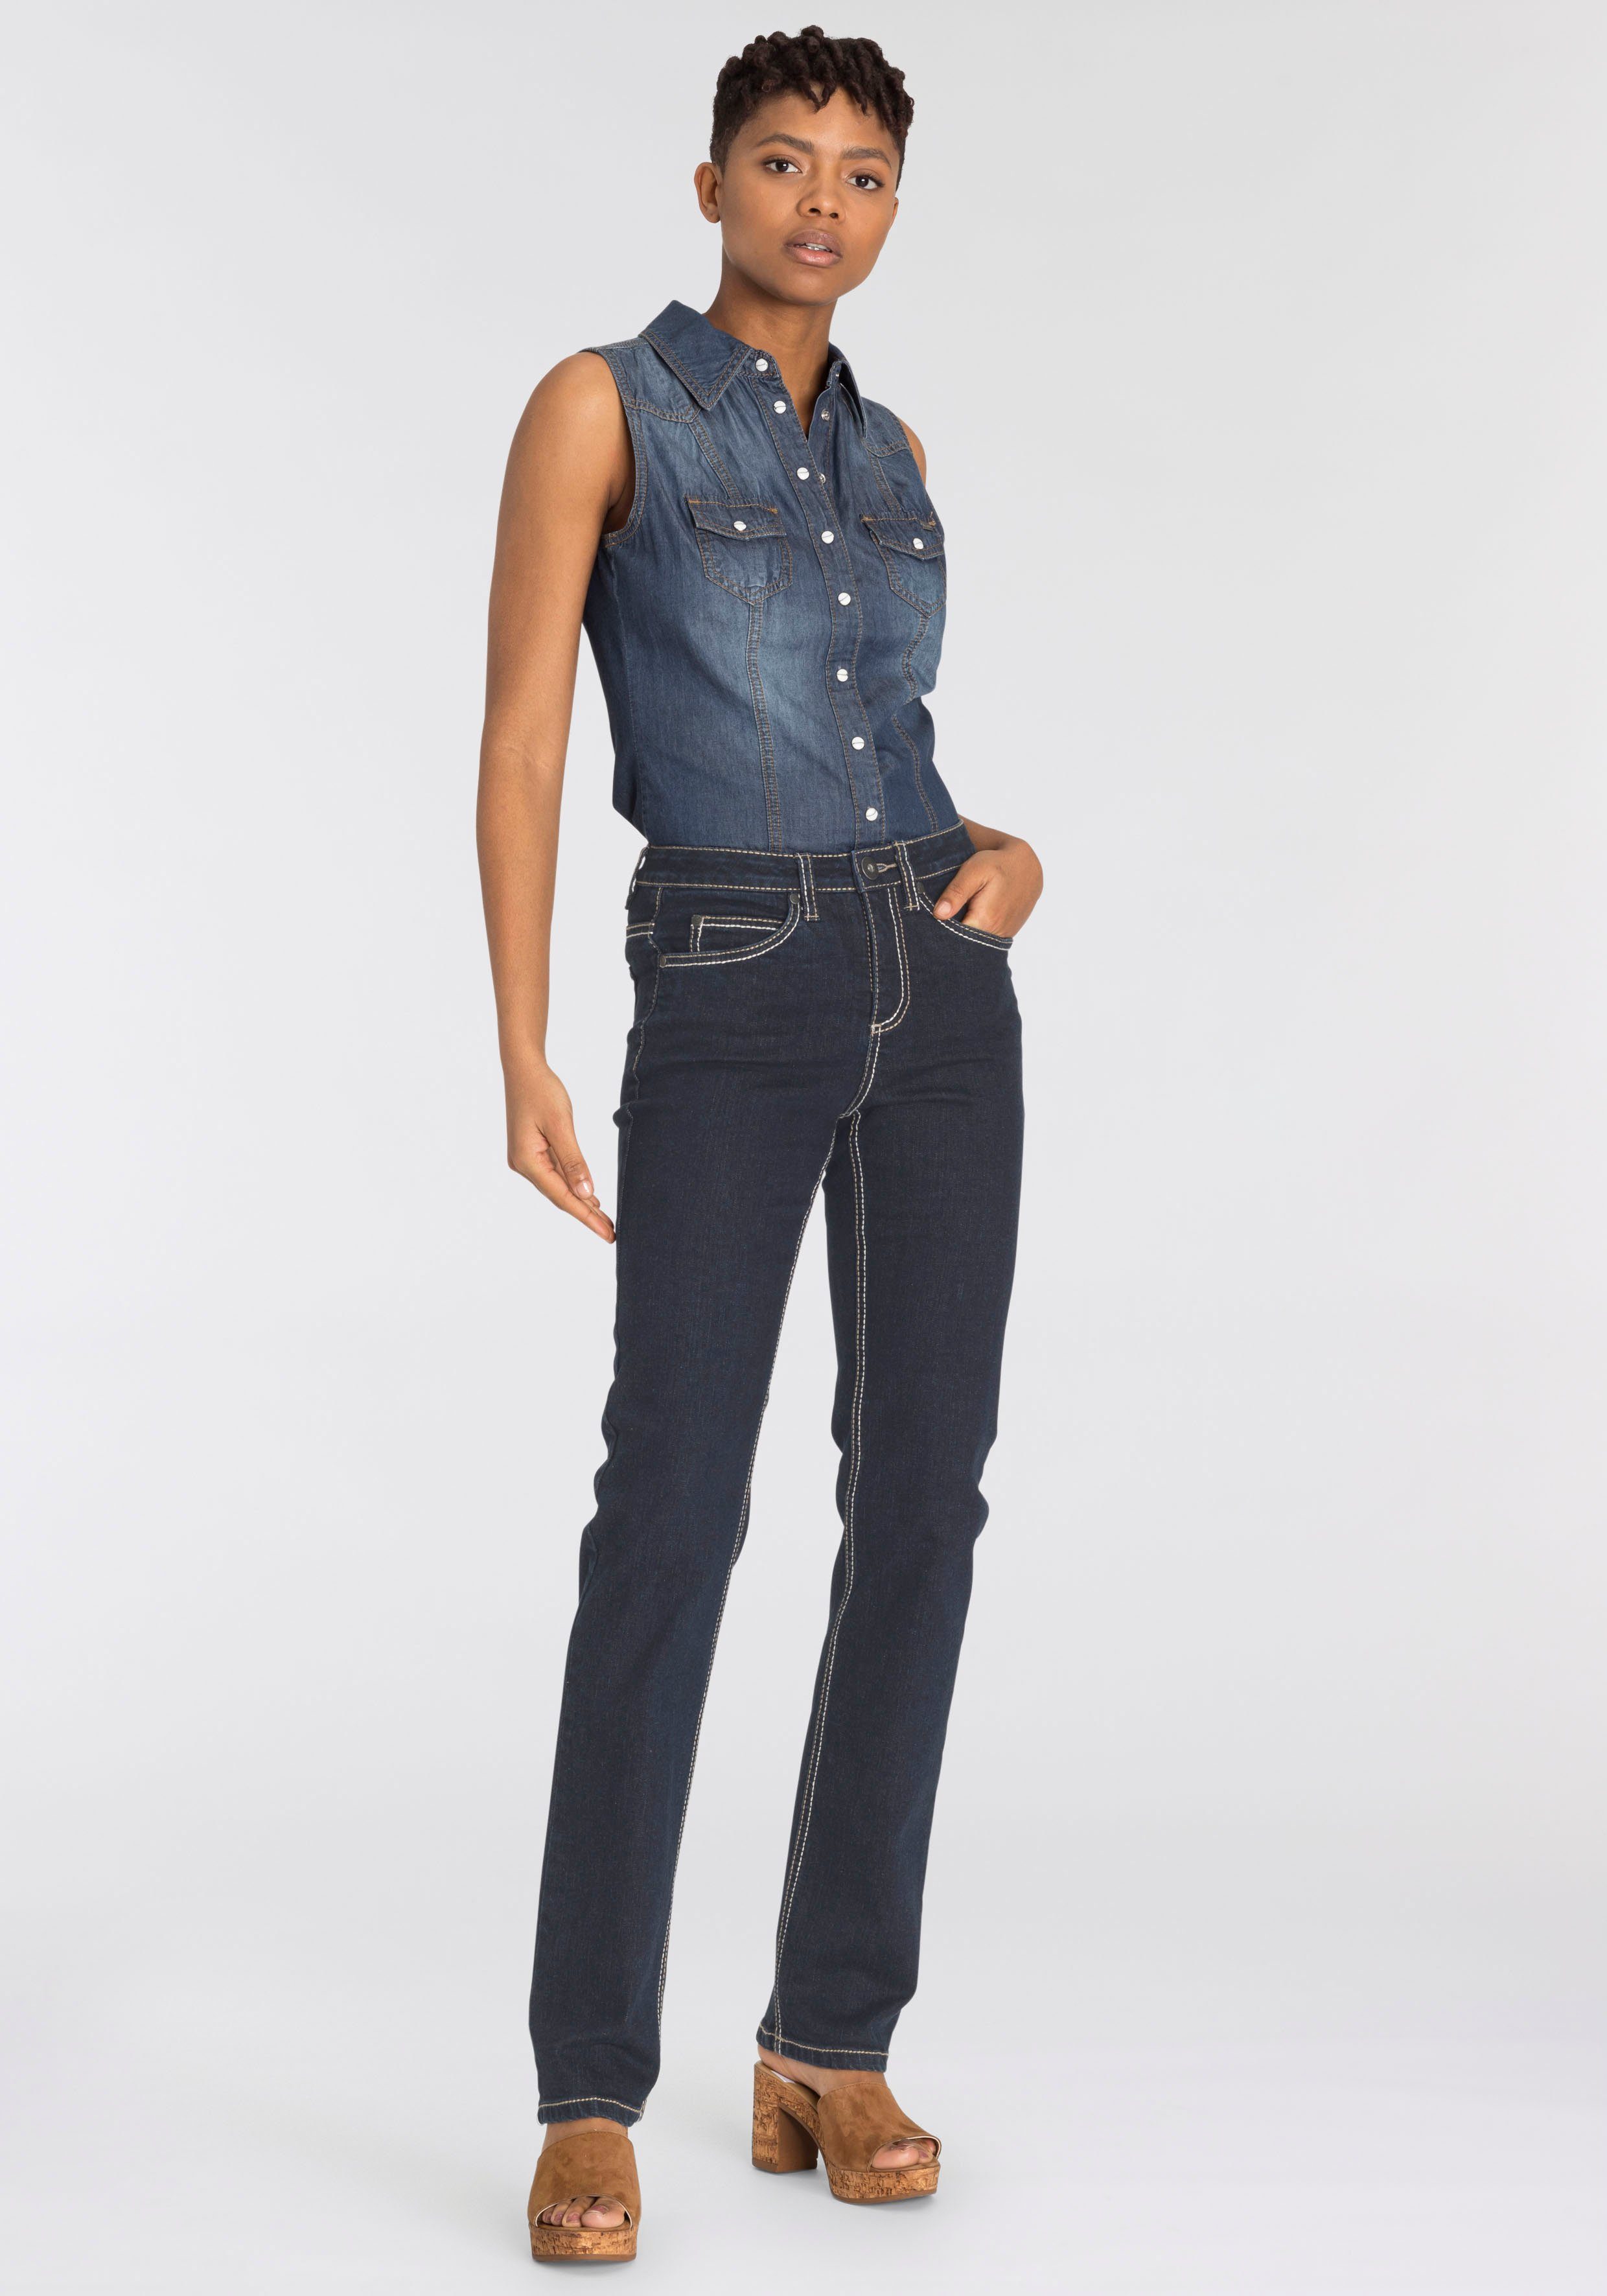 Arizona Jeans Waist Gerade rinsed Comfort-Fit Kontrastnähten mit High